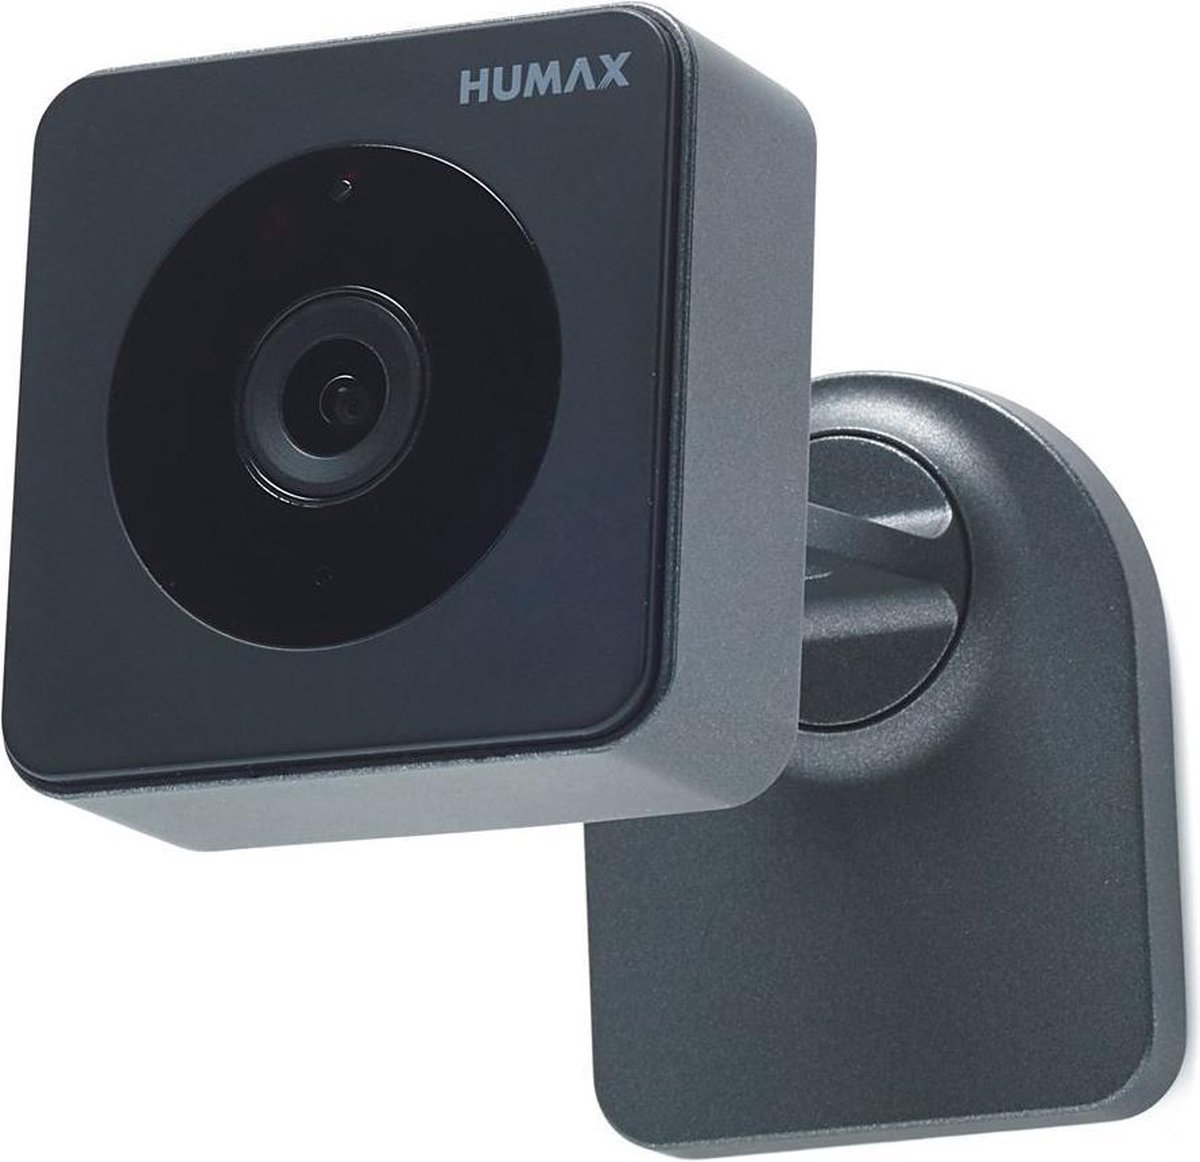 HUMAX Eye HD Cloud Camera Duo Pack